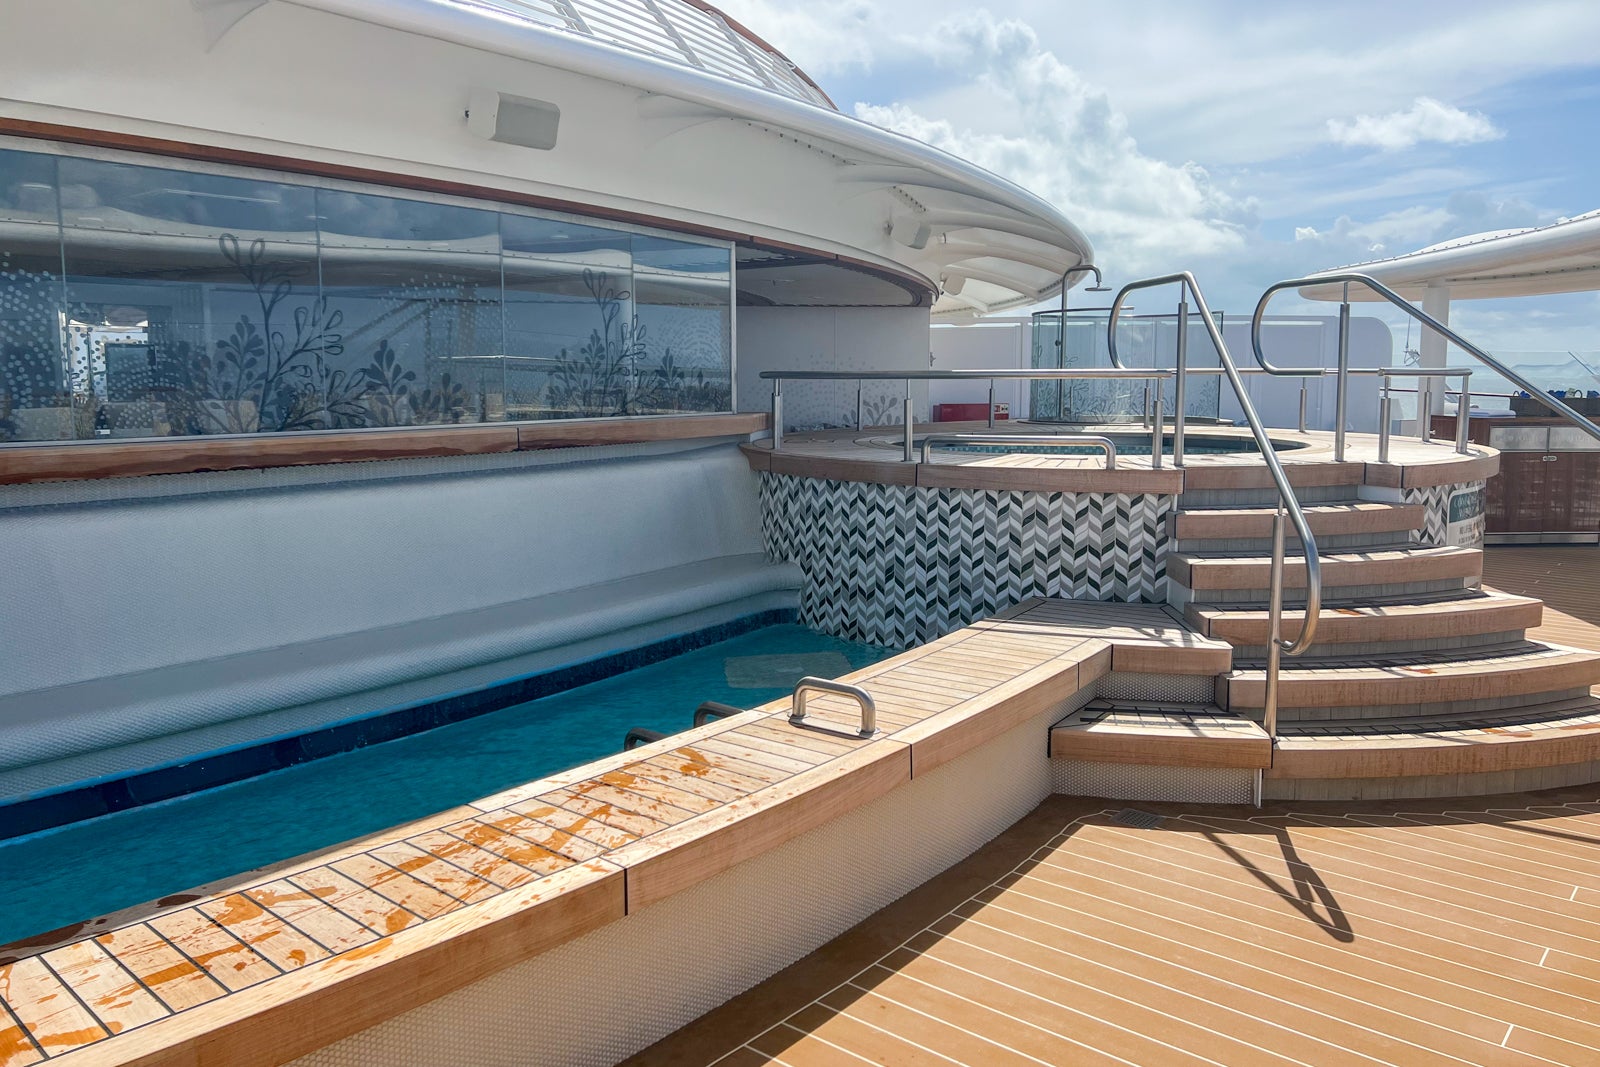 oceanview vs verandah disney cruise